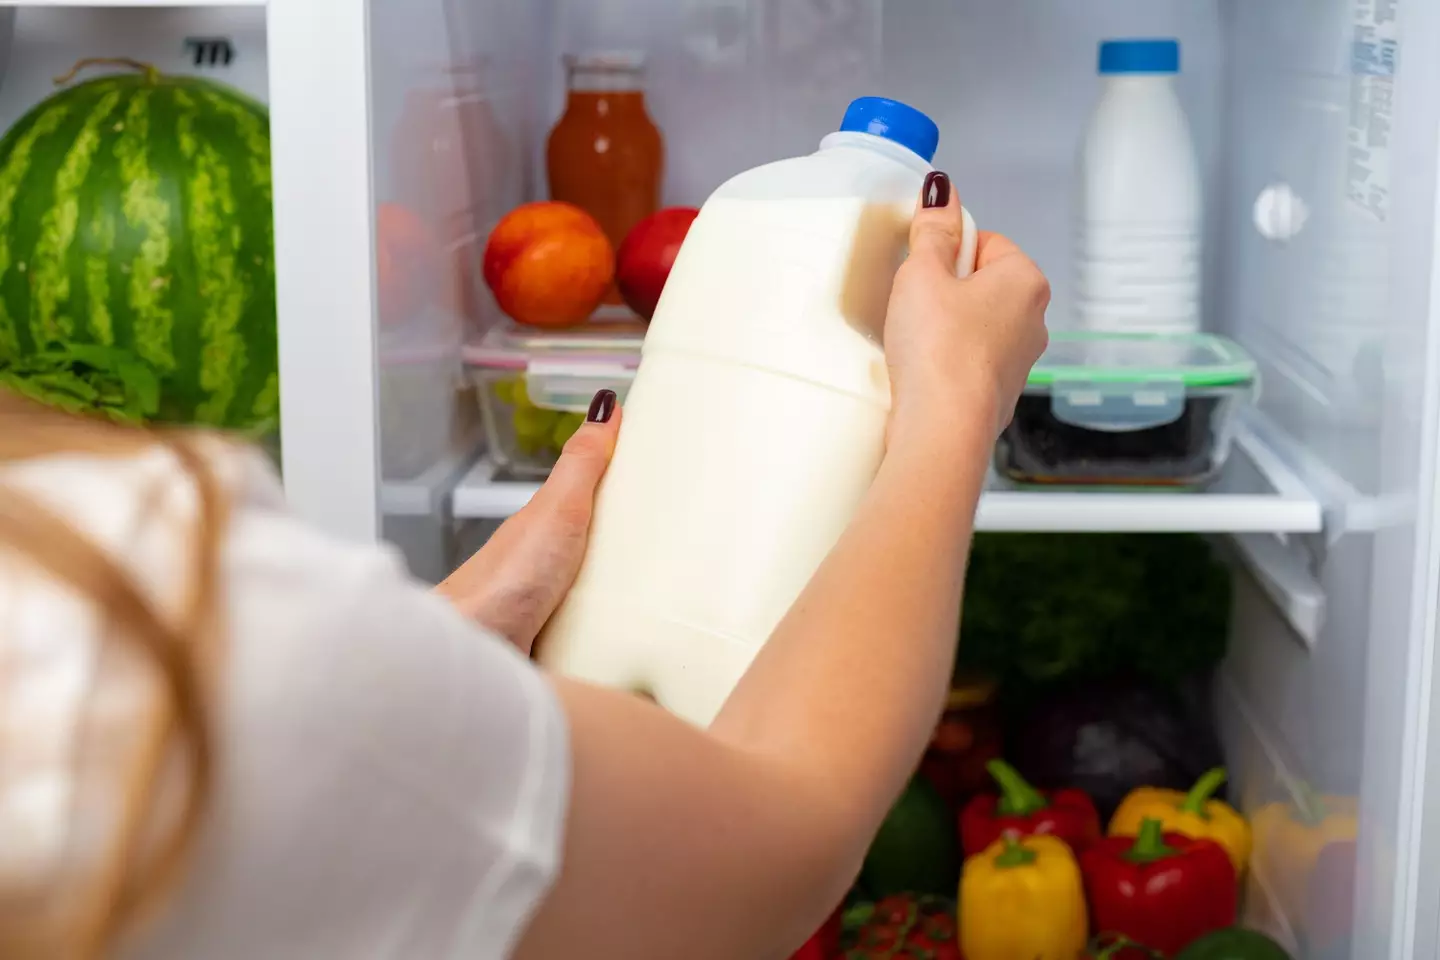 Chris said milk could last longer stored away from the fridge door (